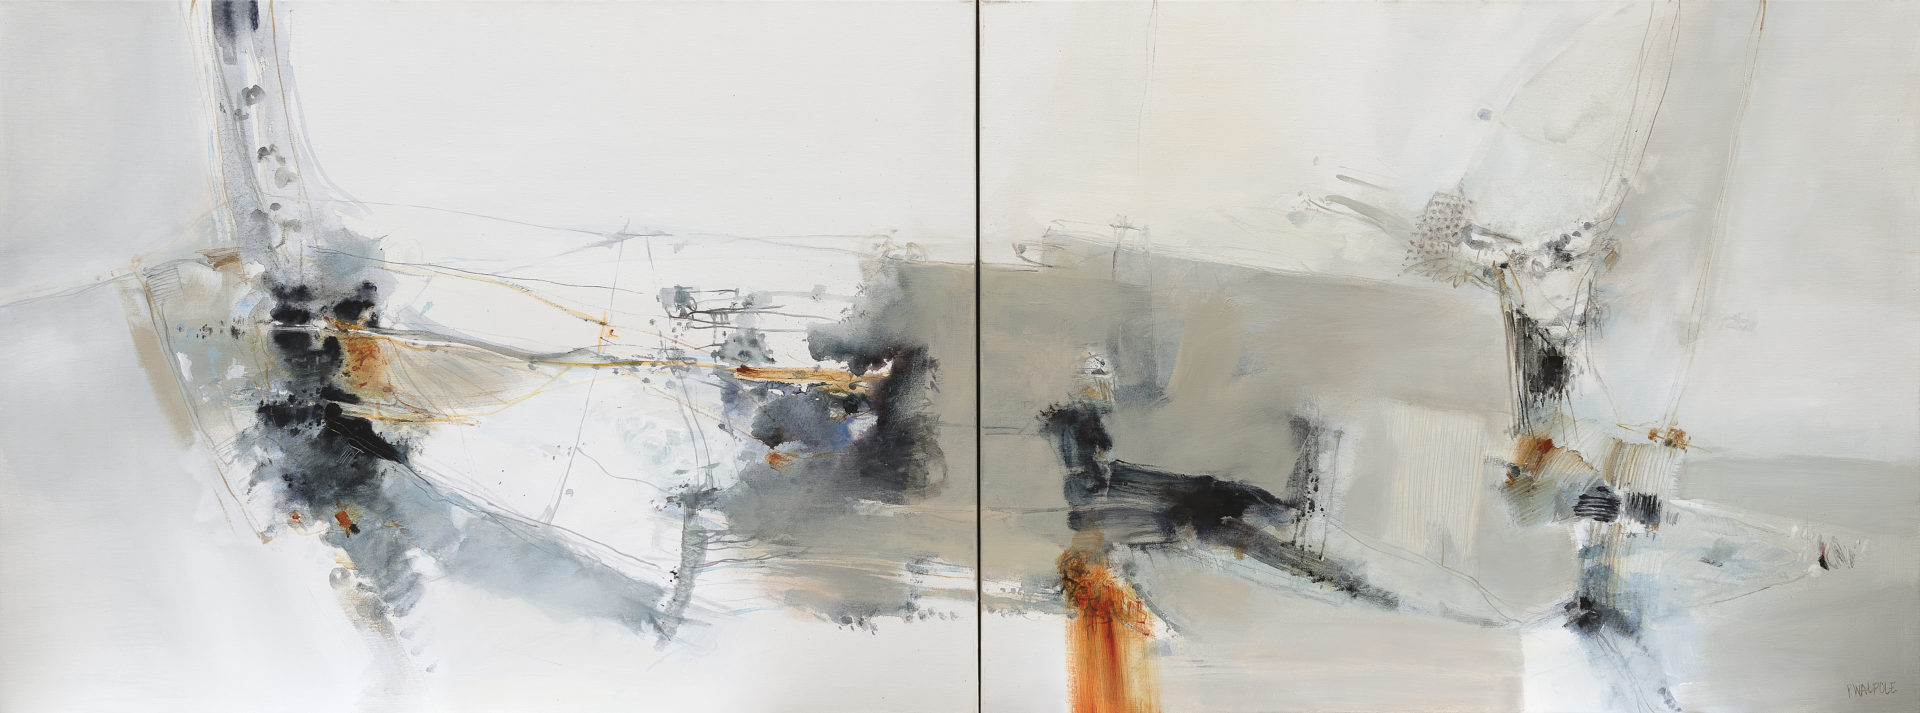 In Flood I & II | Pam Walpole | Mixed media on canvas diptych. | 91 x 244 cm | $6500